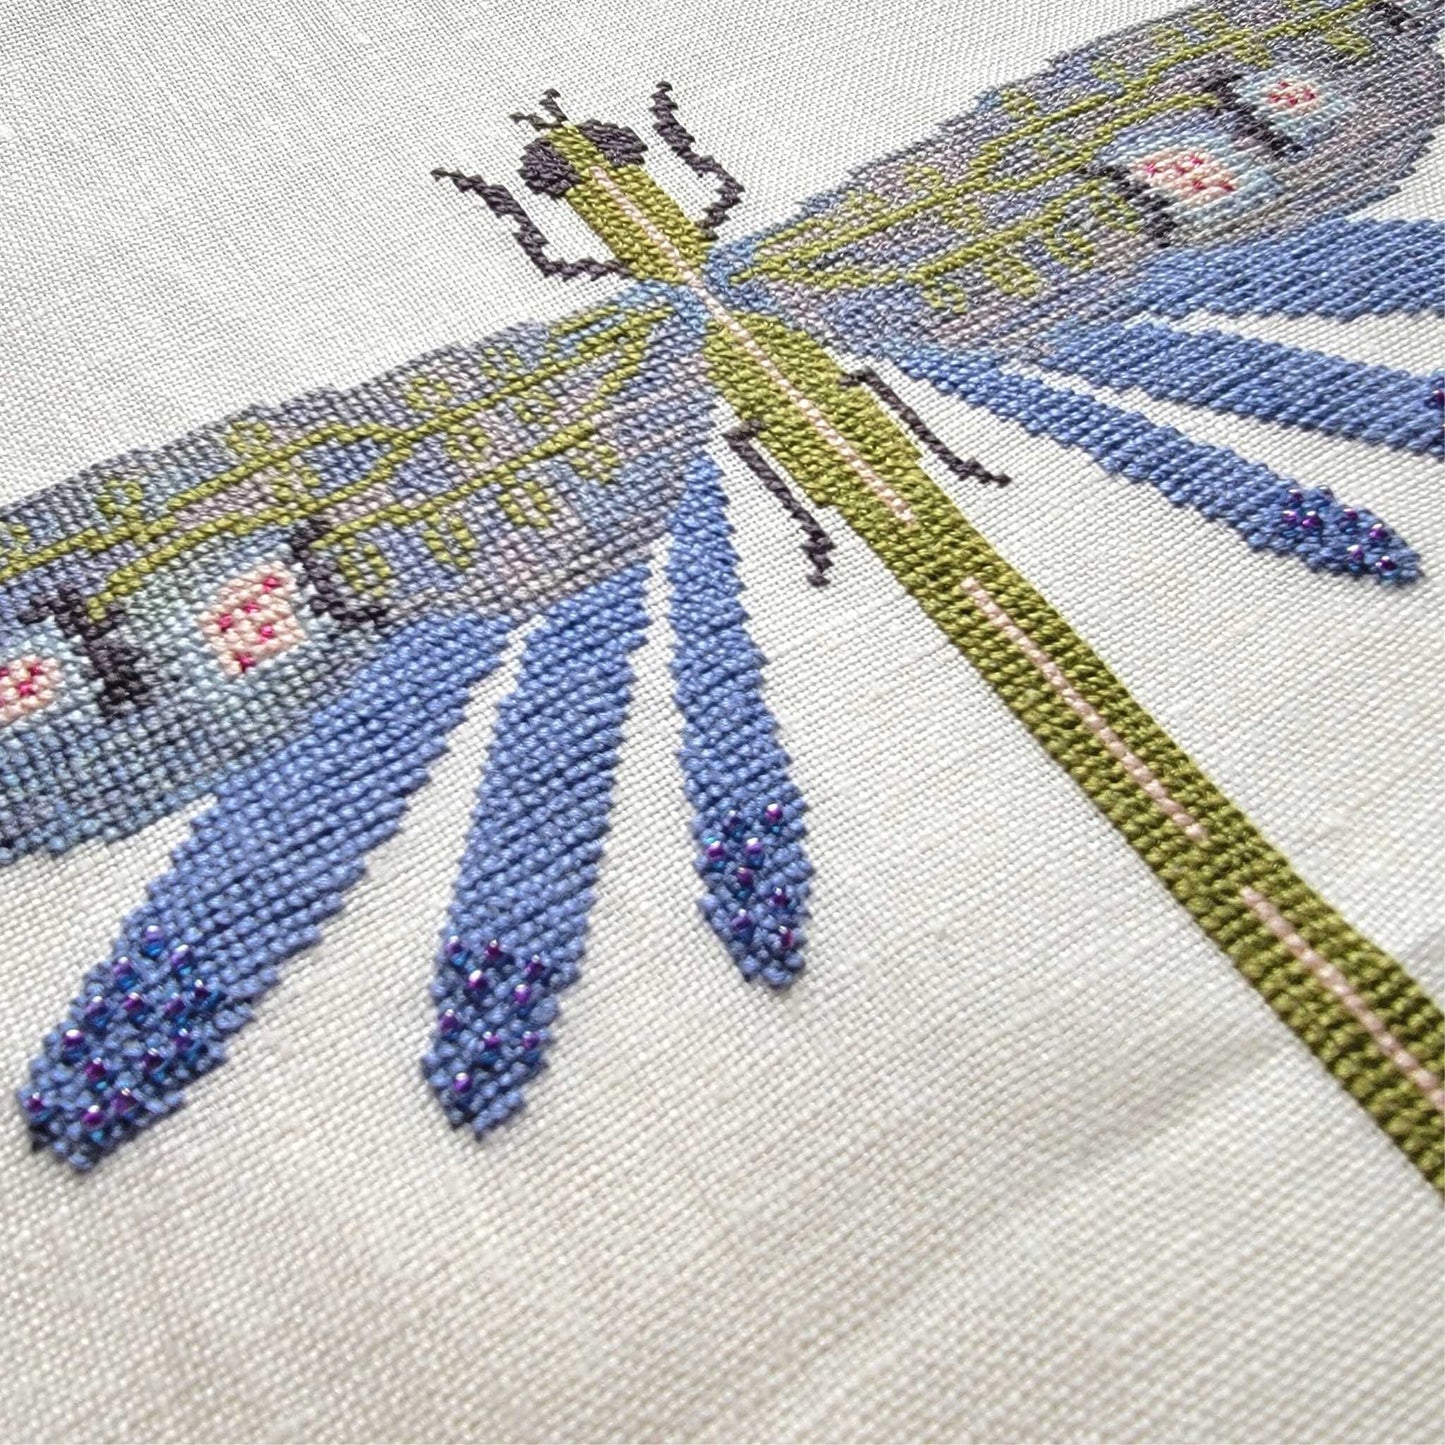 Flower Dragonfly Cross stitch Pattern